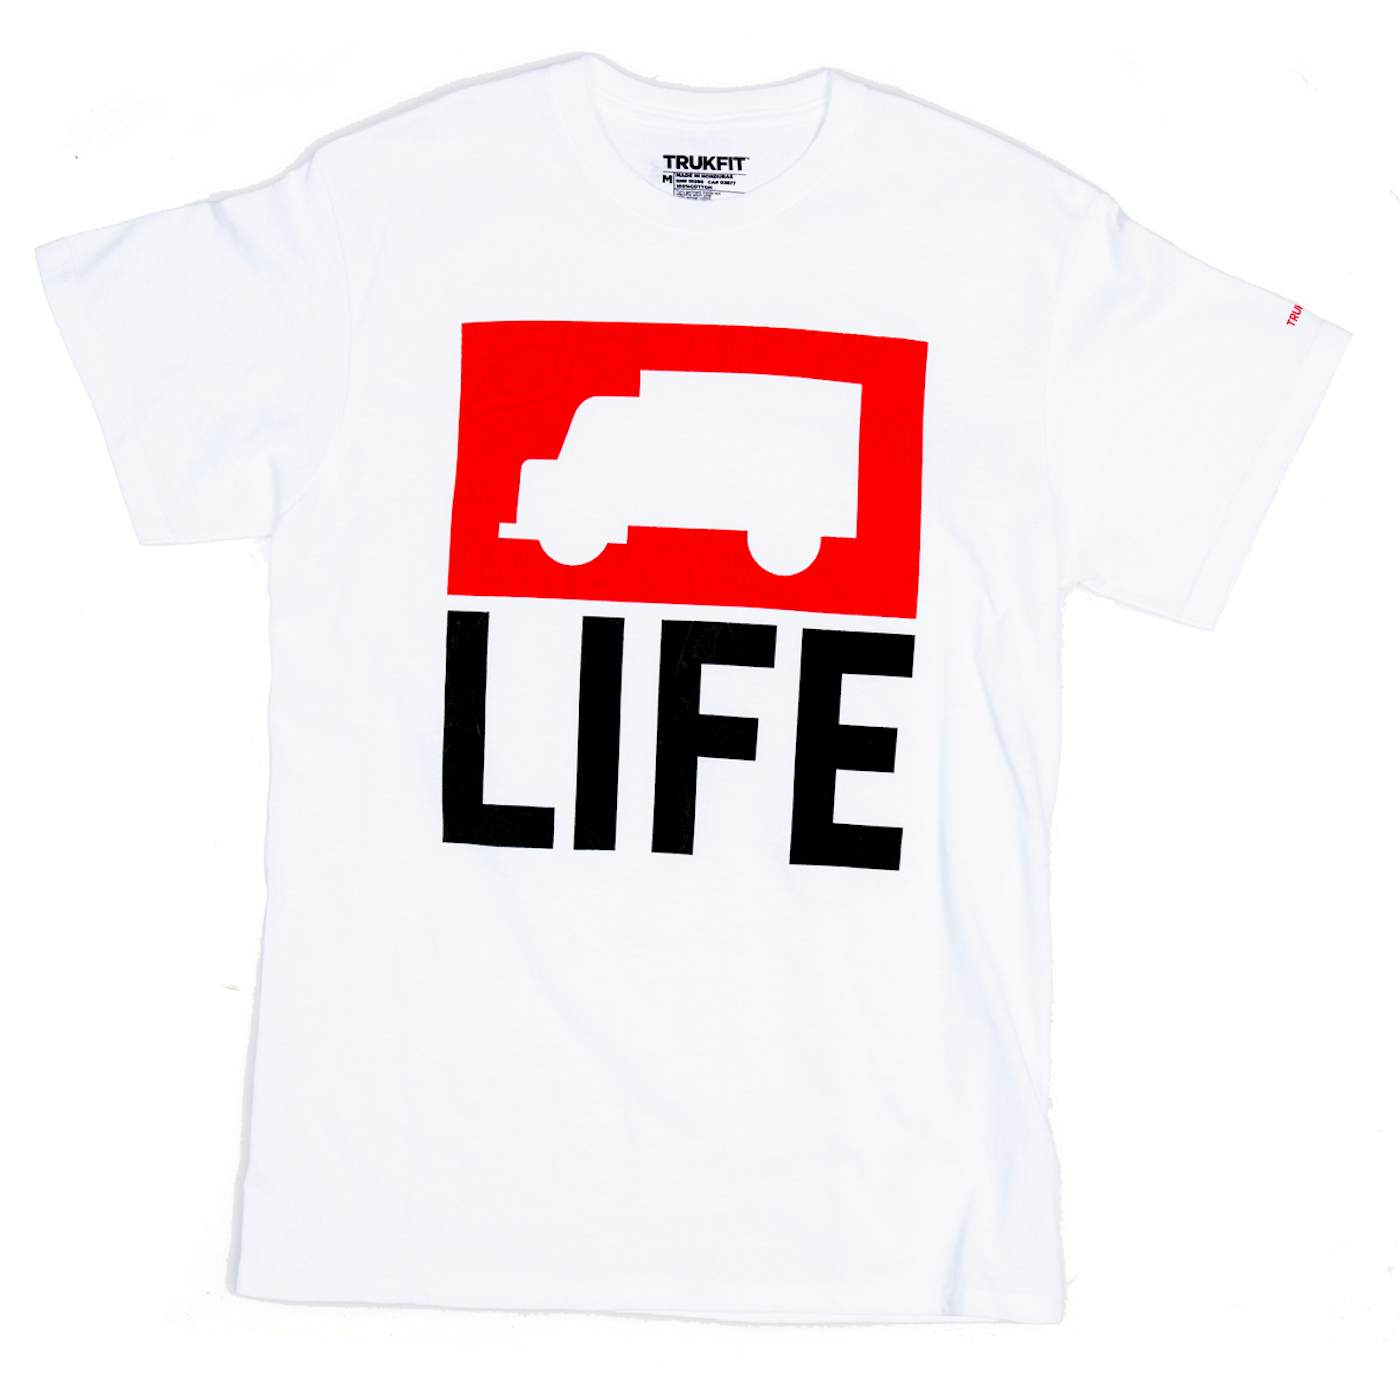 TRUKFIT Life T-Shirt
